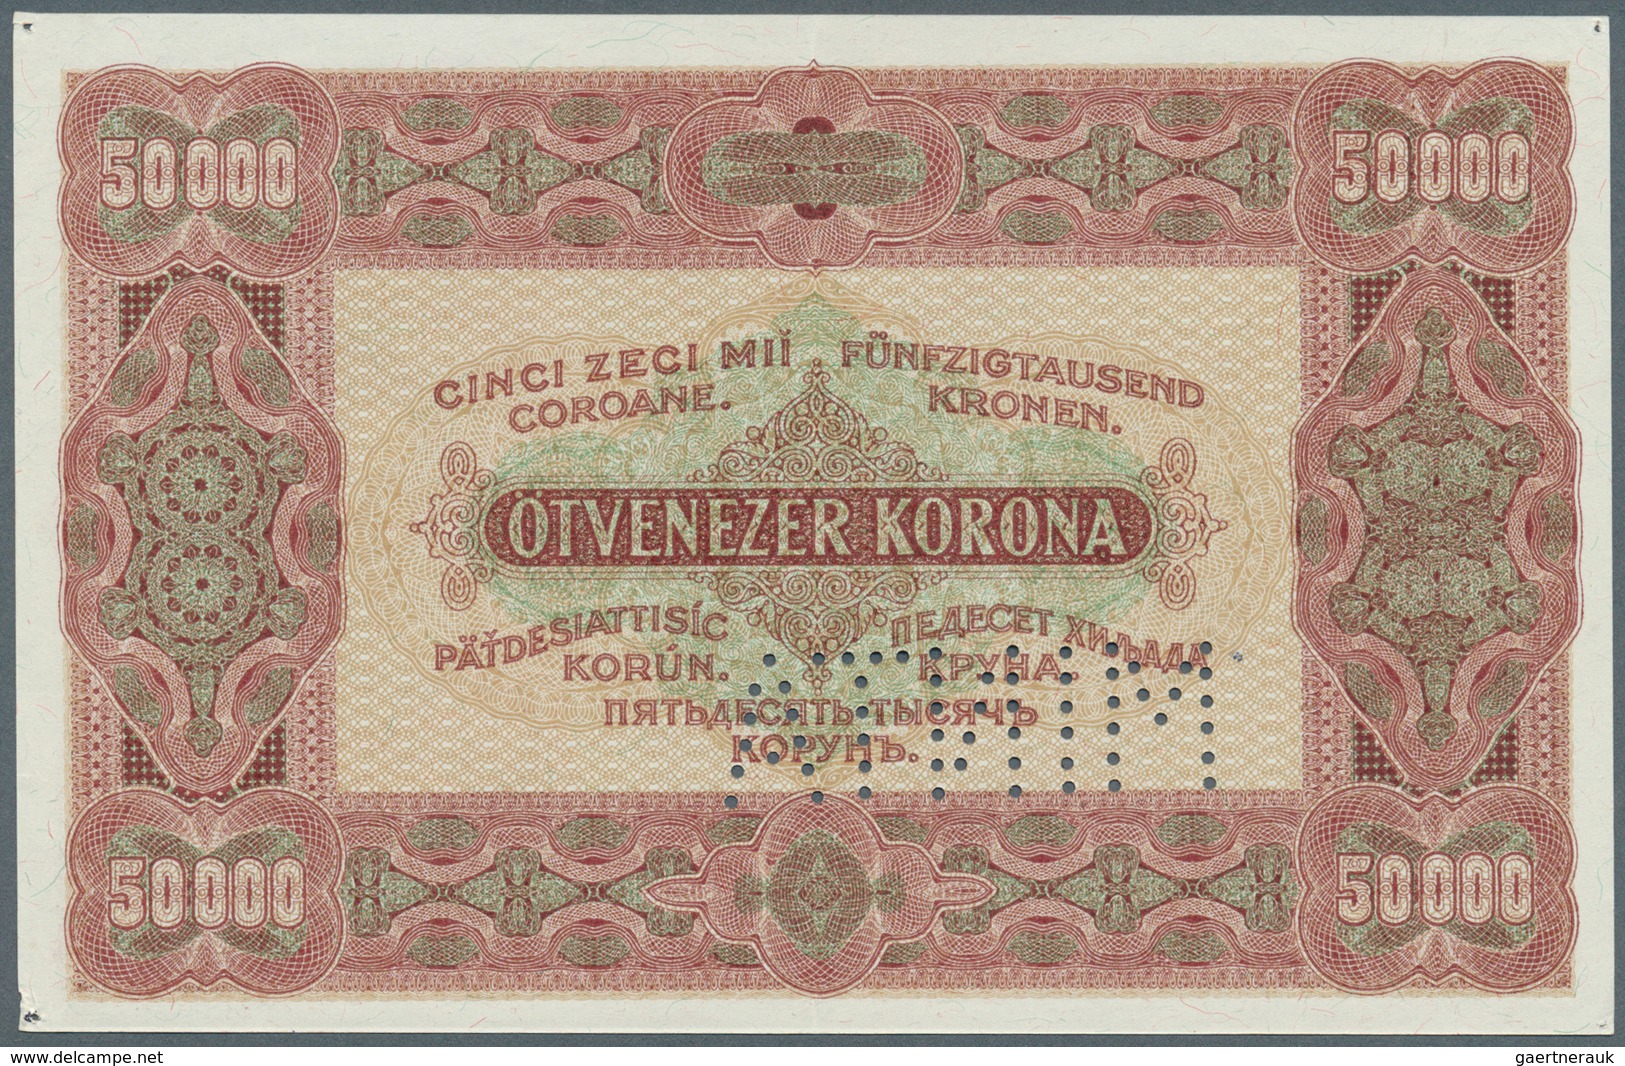 01692 Hungary / Ungarn: Penzügyminiszterium, 50.000 Korona 1923 MINTA (Specimen), P.71s, Tiny Pinholes At - Hungary